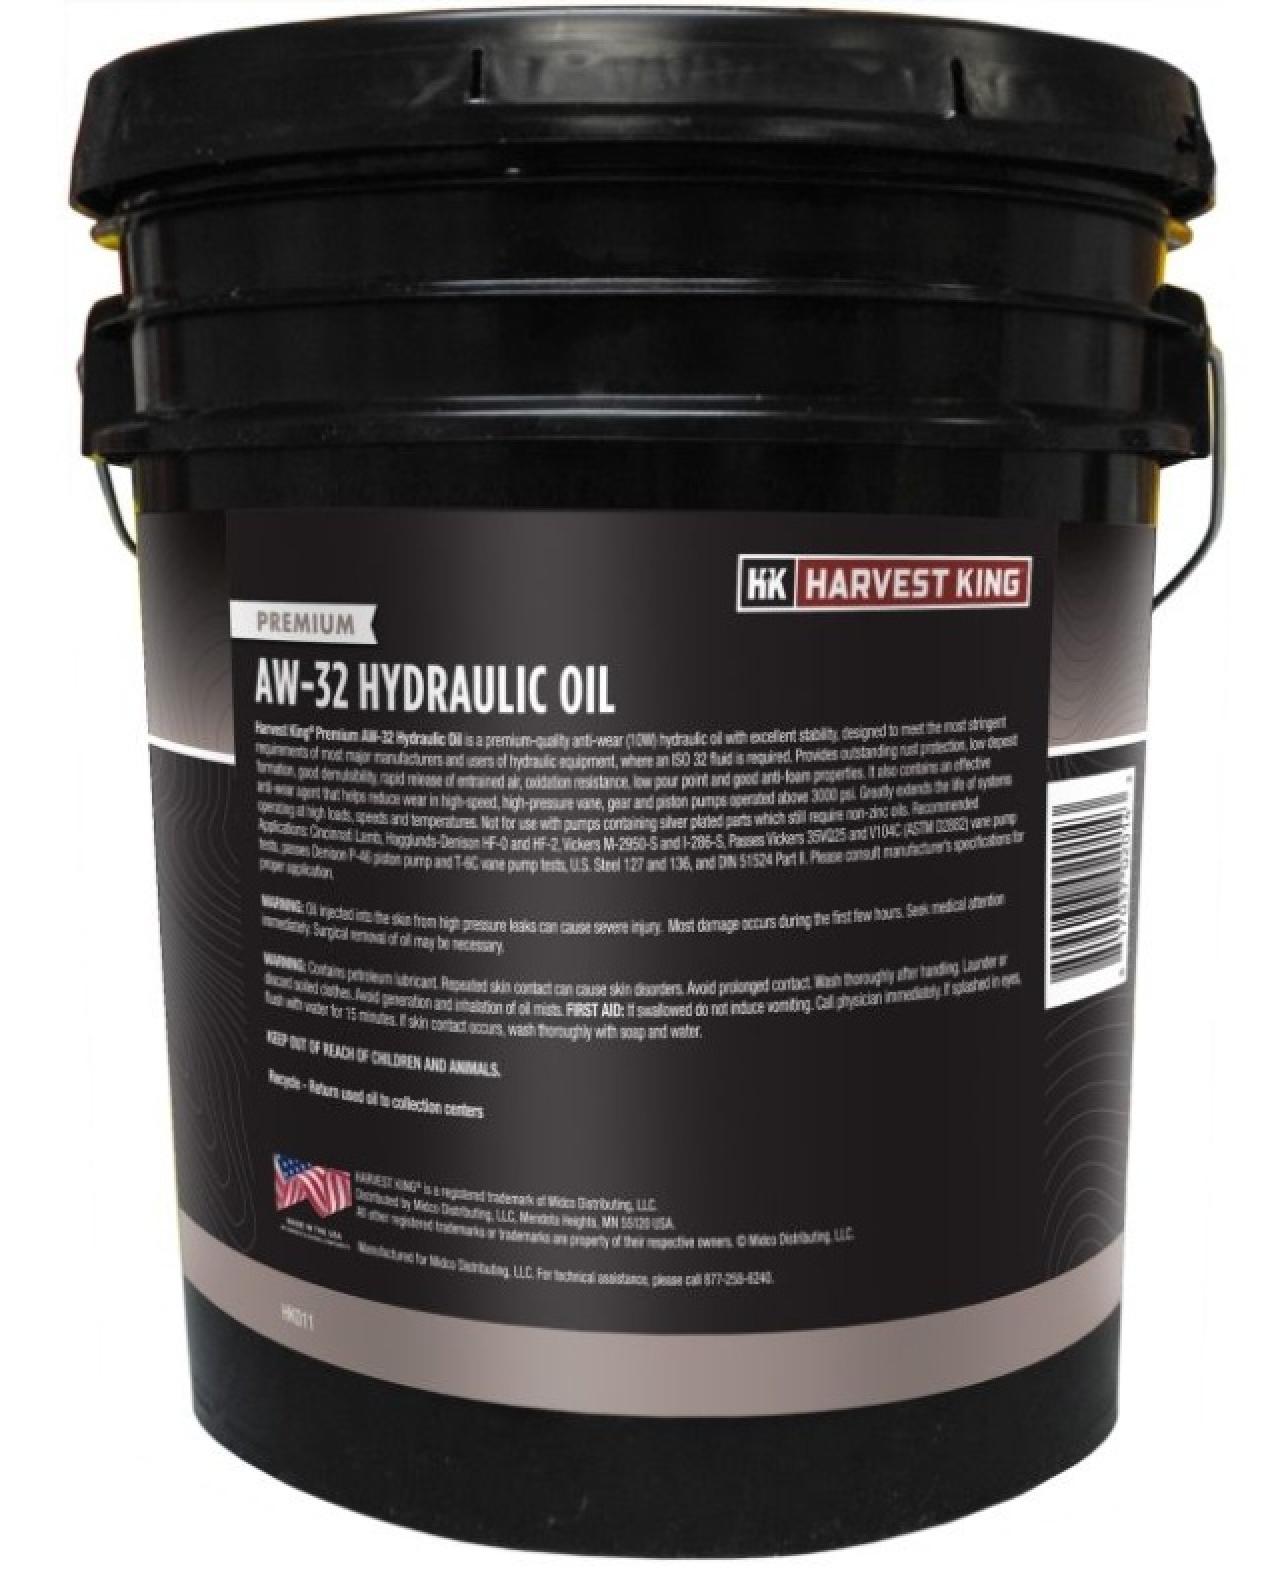 Harvest King Premium AW-32 Hydraulic Oil